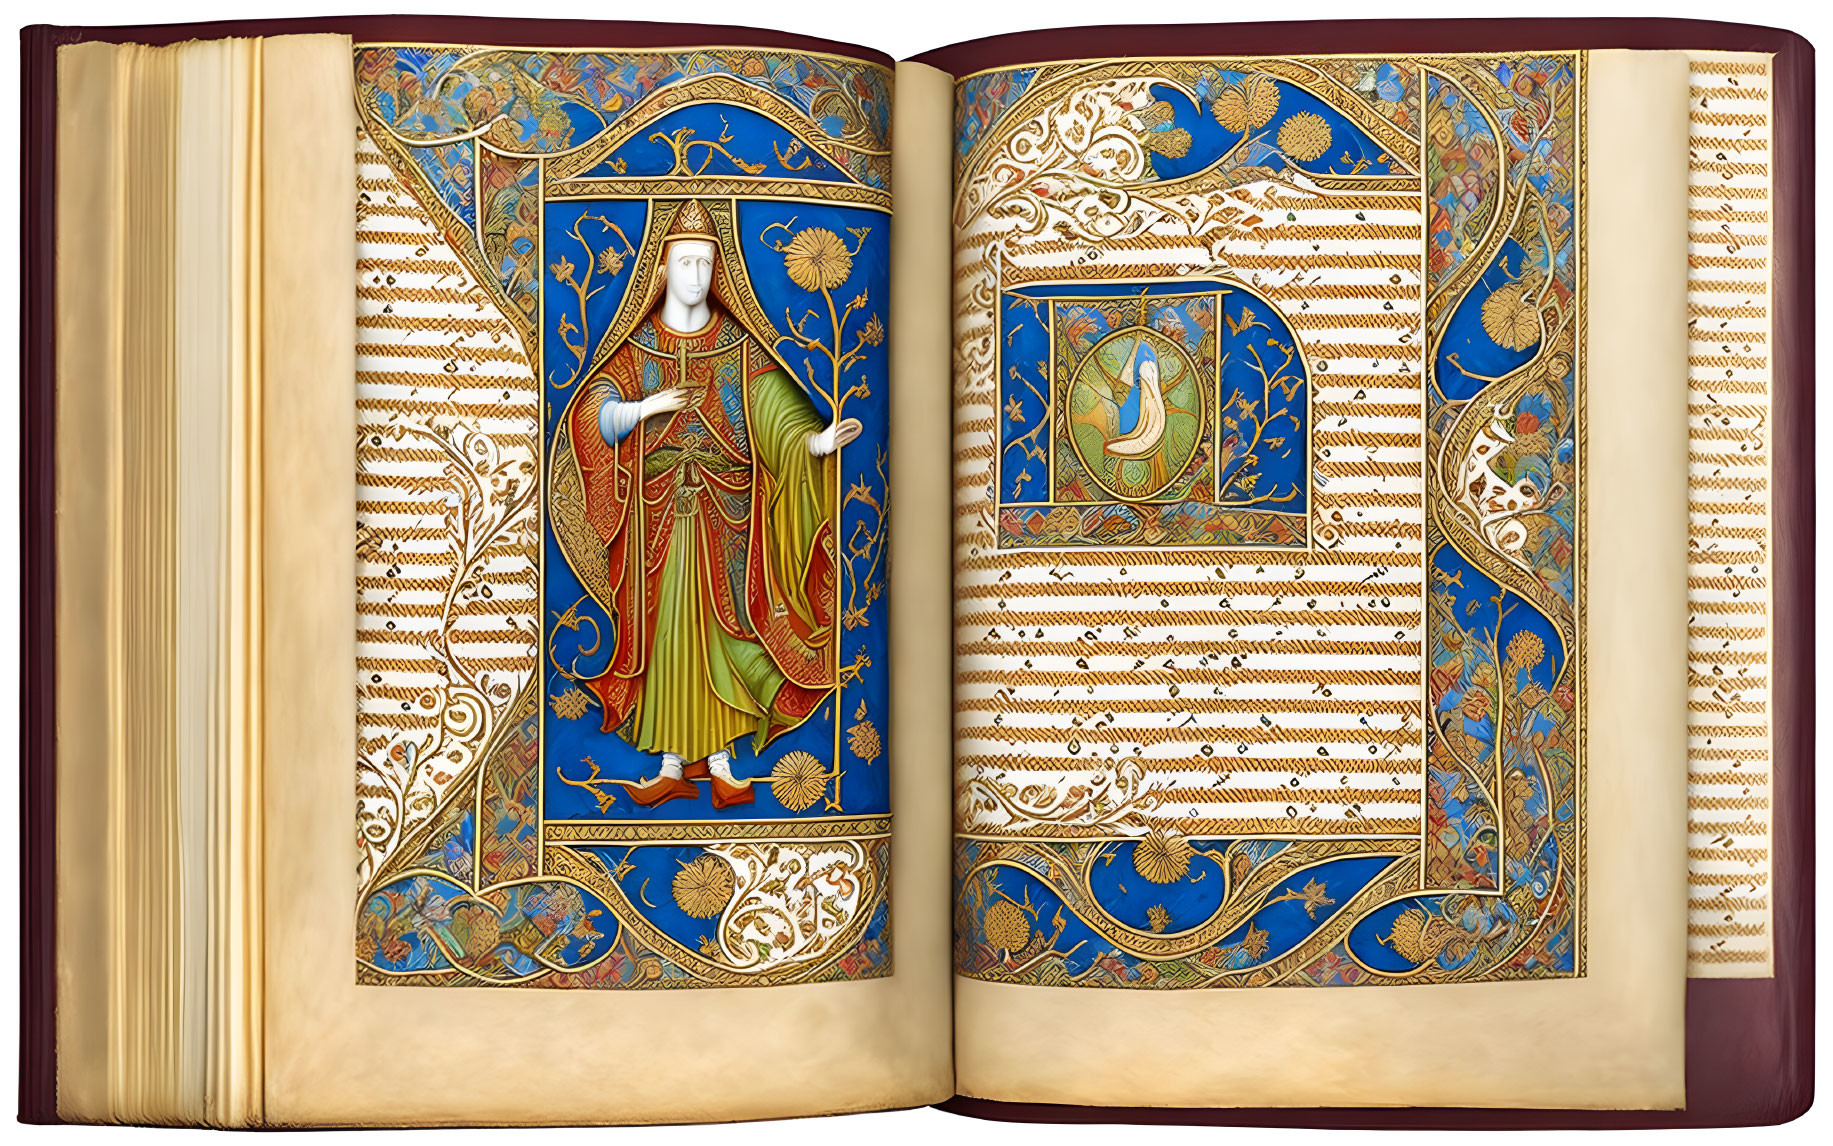 Detailed Illuminated Manuscript Featuring Religious Figure in Ornate Robes